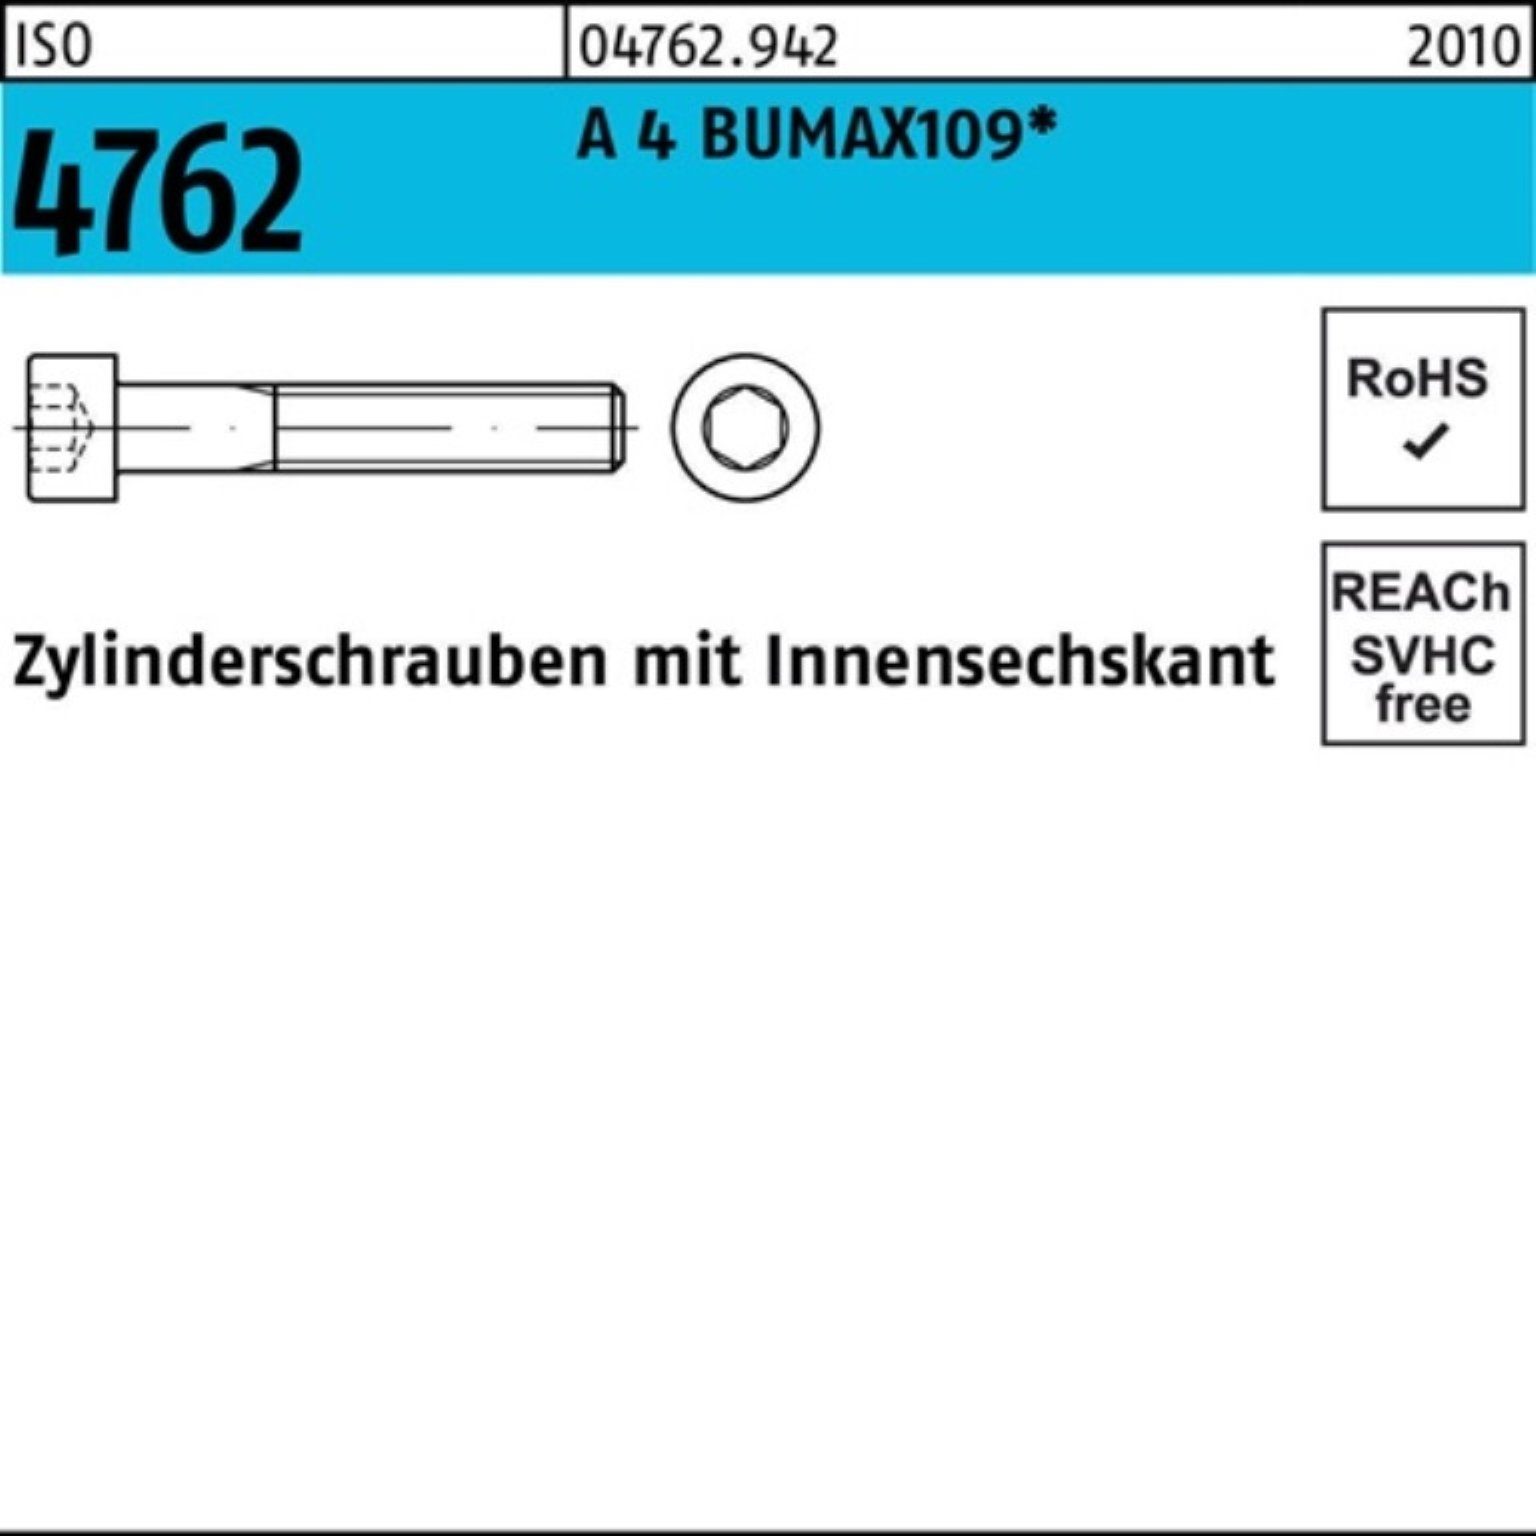 Bufab Zylinderschraube 100er Pack Zylinderschraube ISO 4762 Innen-6kt M6x 20 A 4 BUMAX109 100